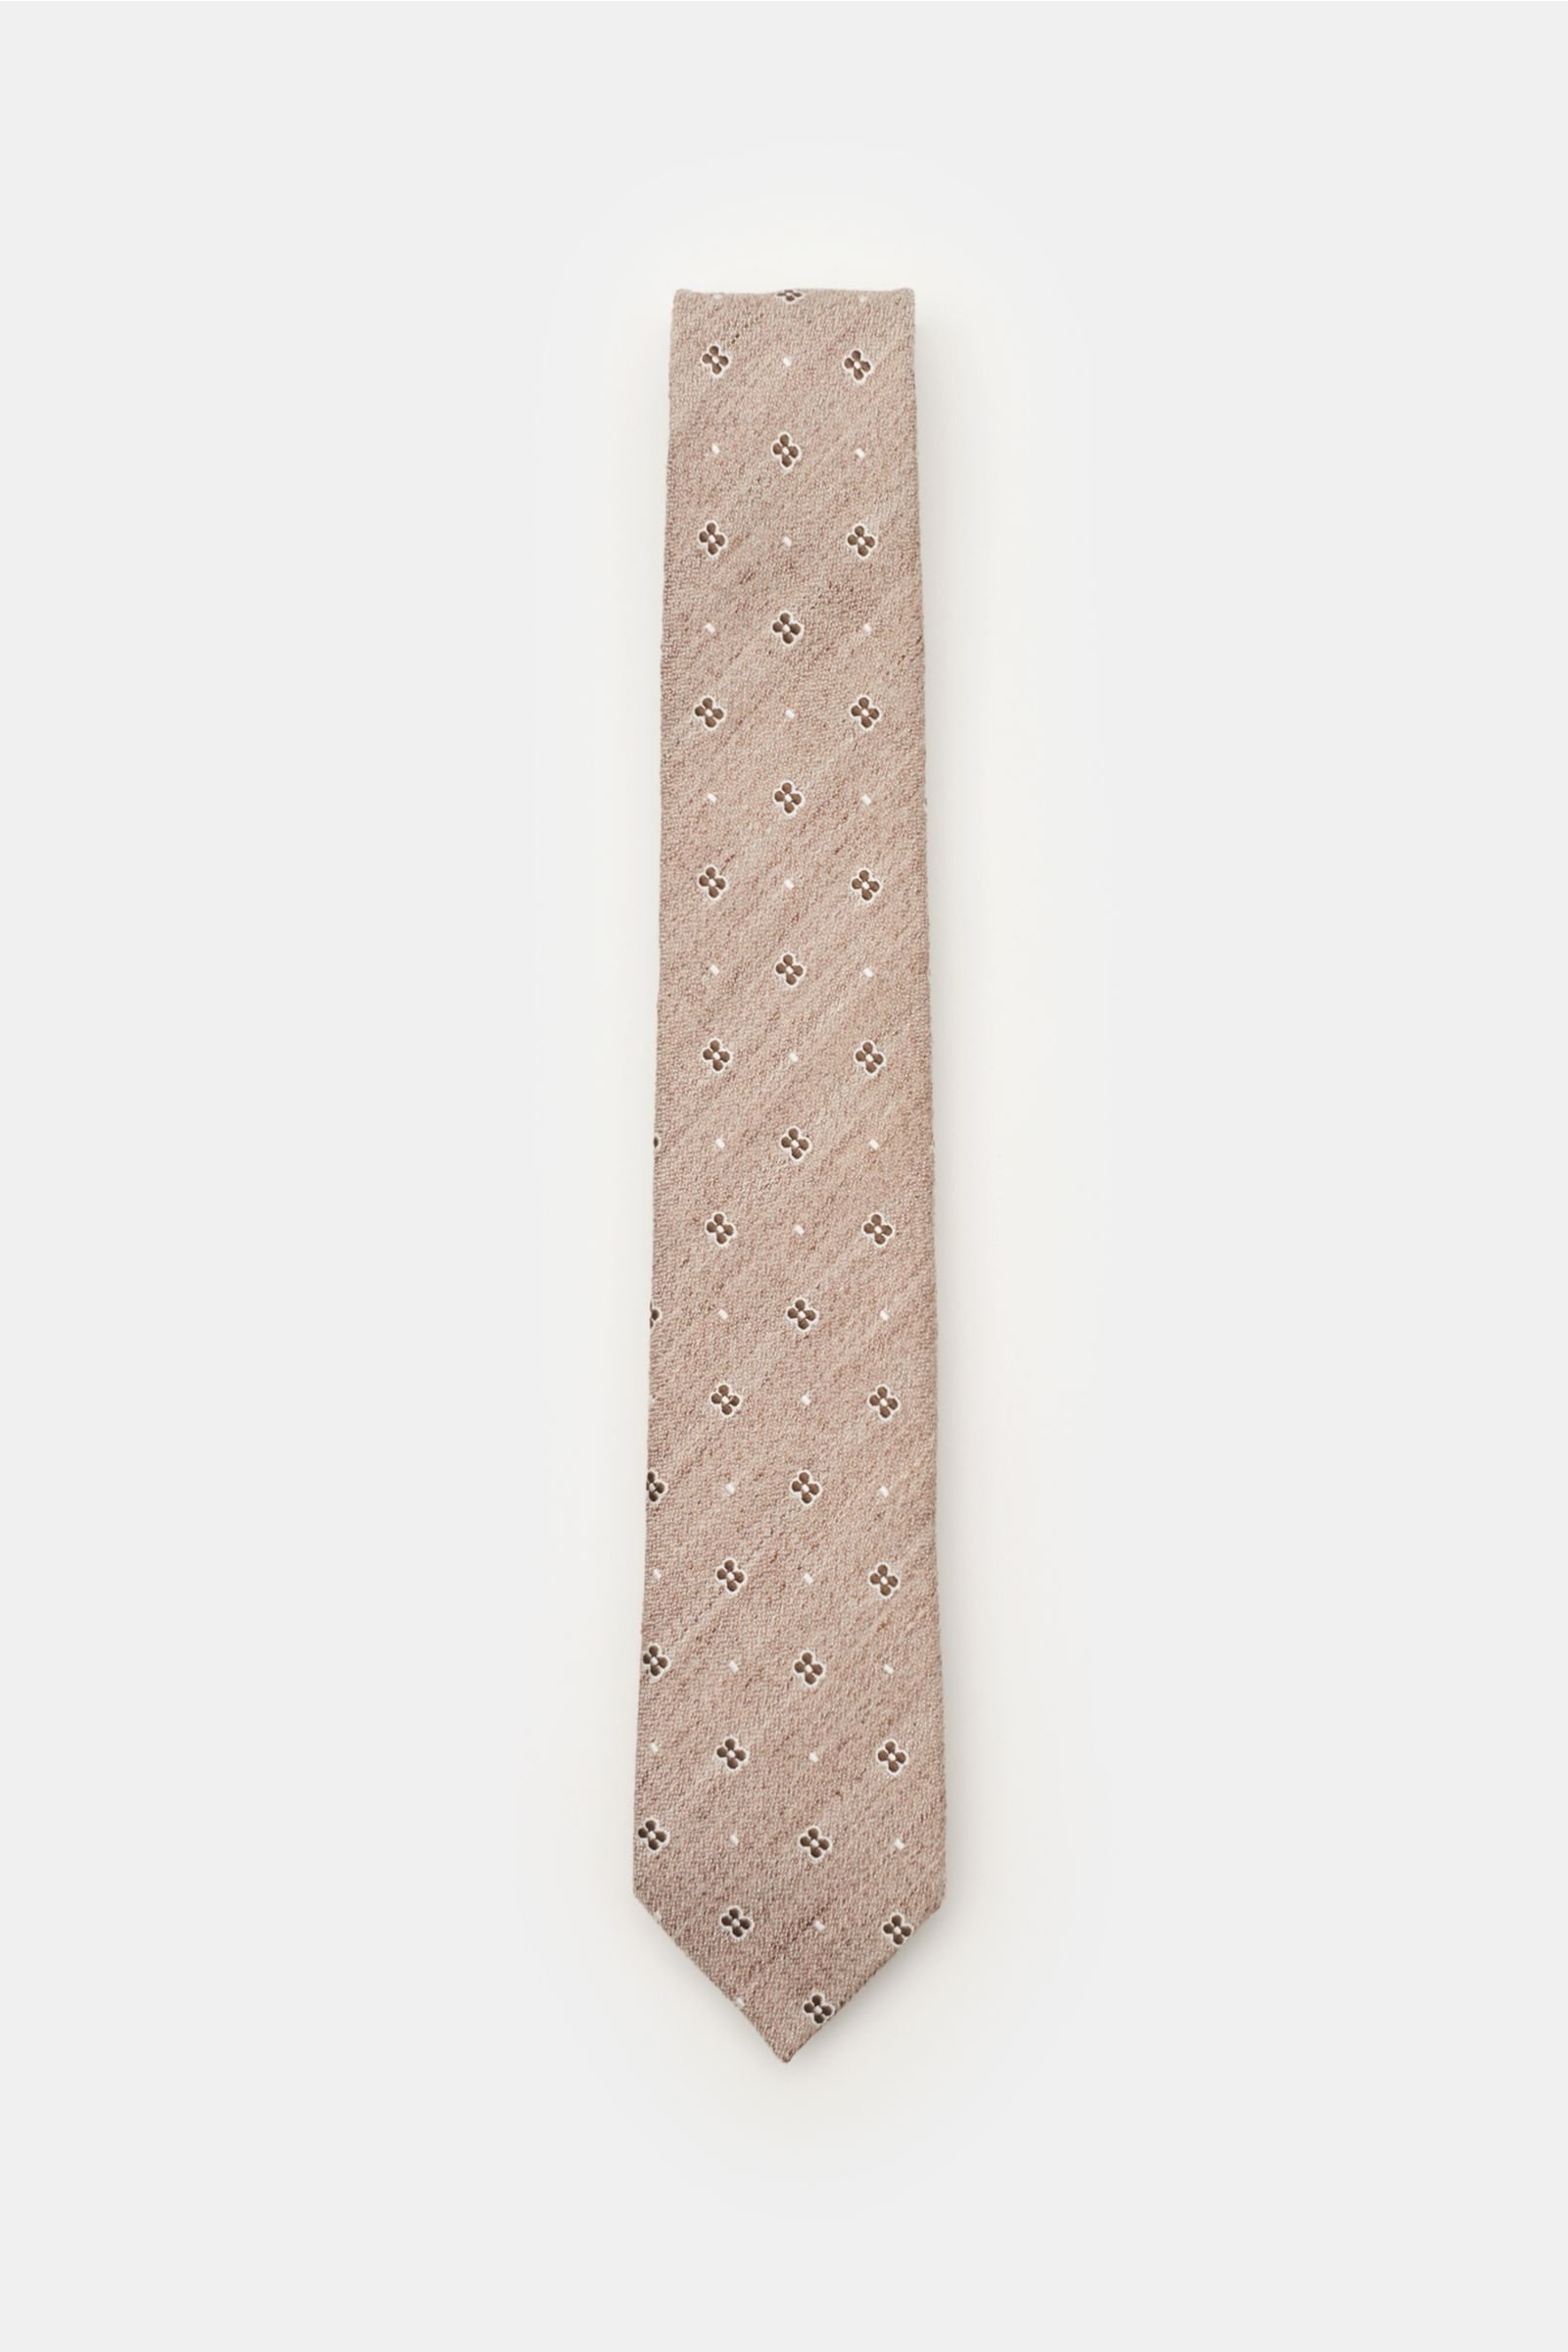 Krawatte beige/braun gemustert